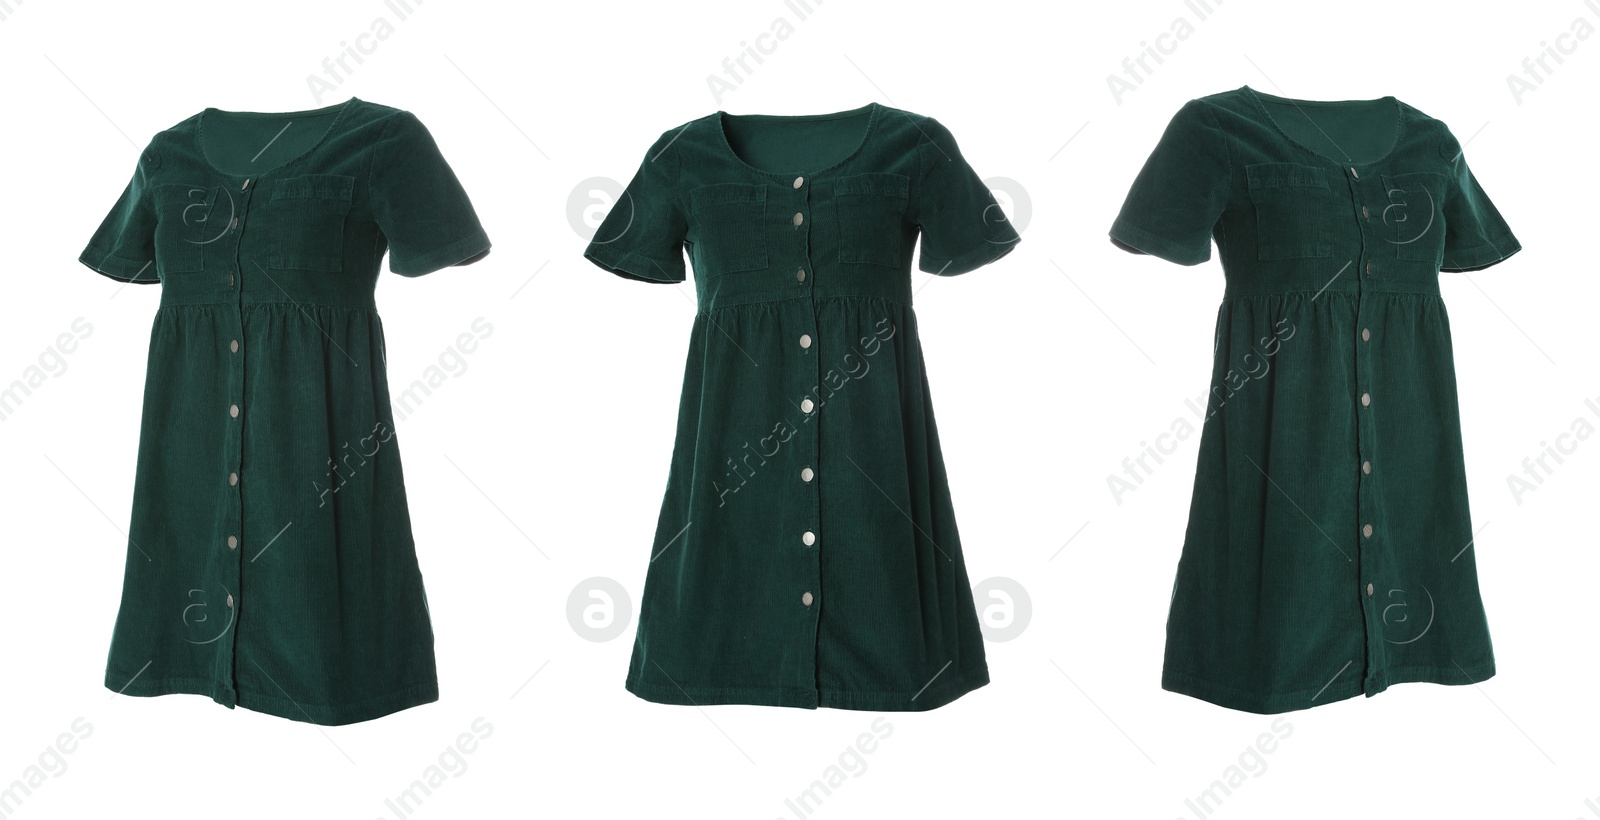 Image of Set of stylish short dark green velour dresses from different views on white background. Banner design